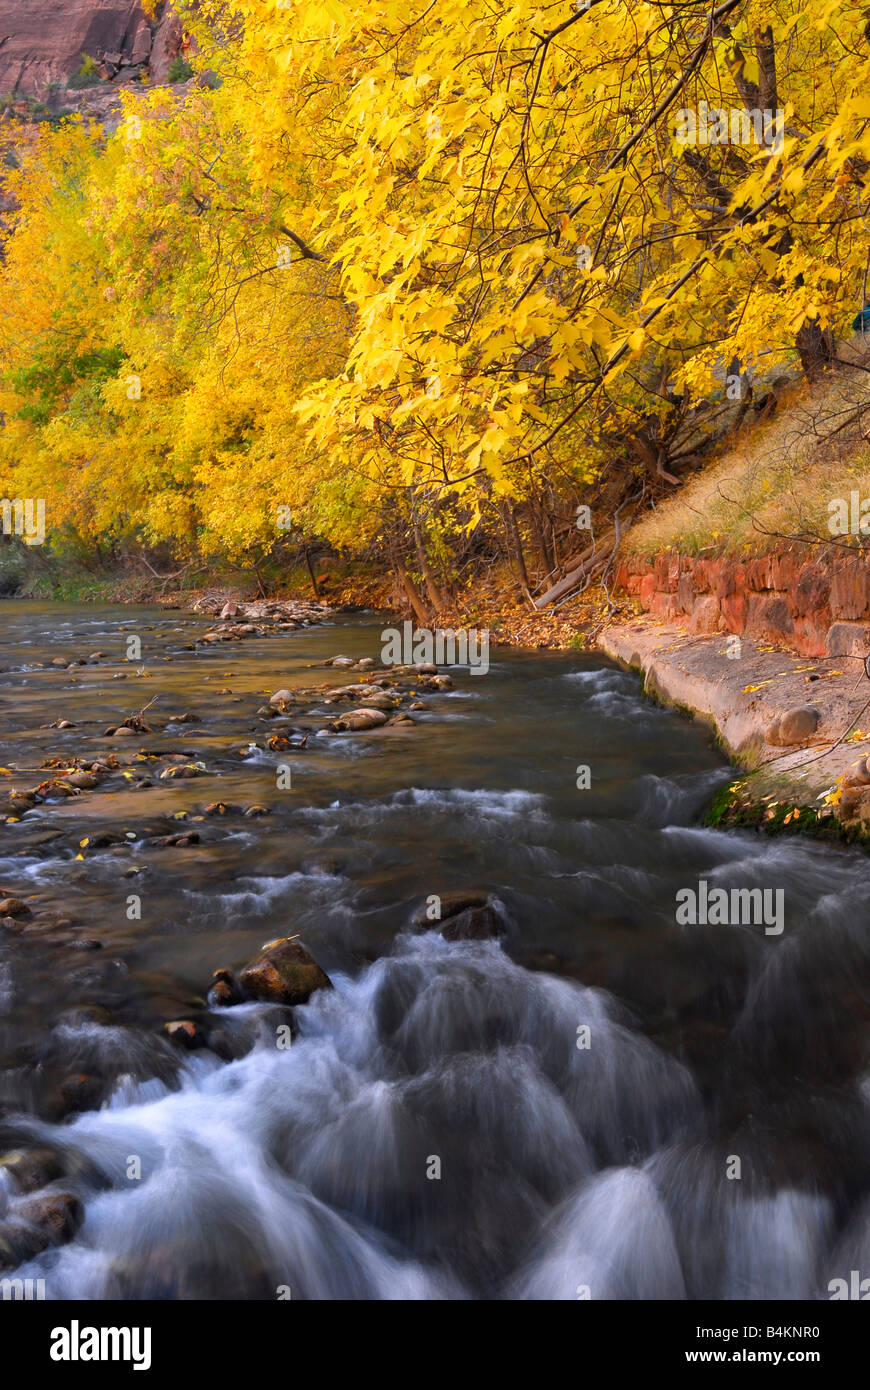 Herbstfarben im Zion Nationalpark, Utah Stockfoto